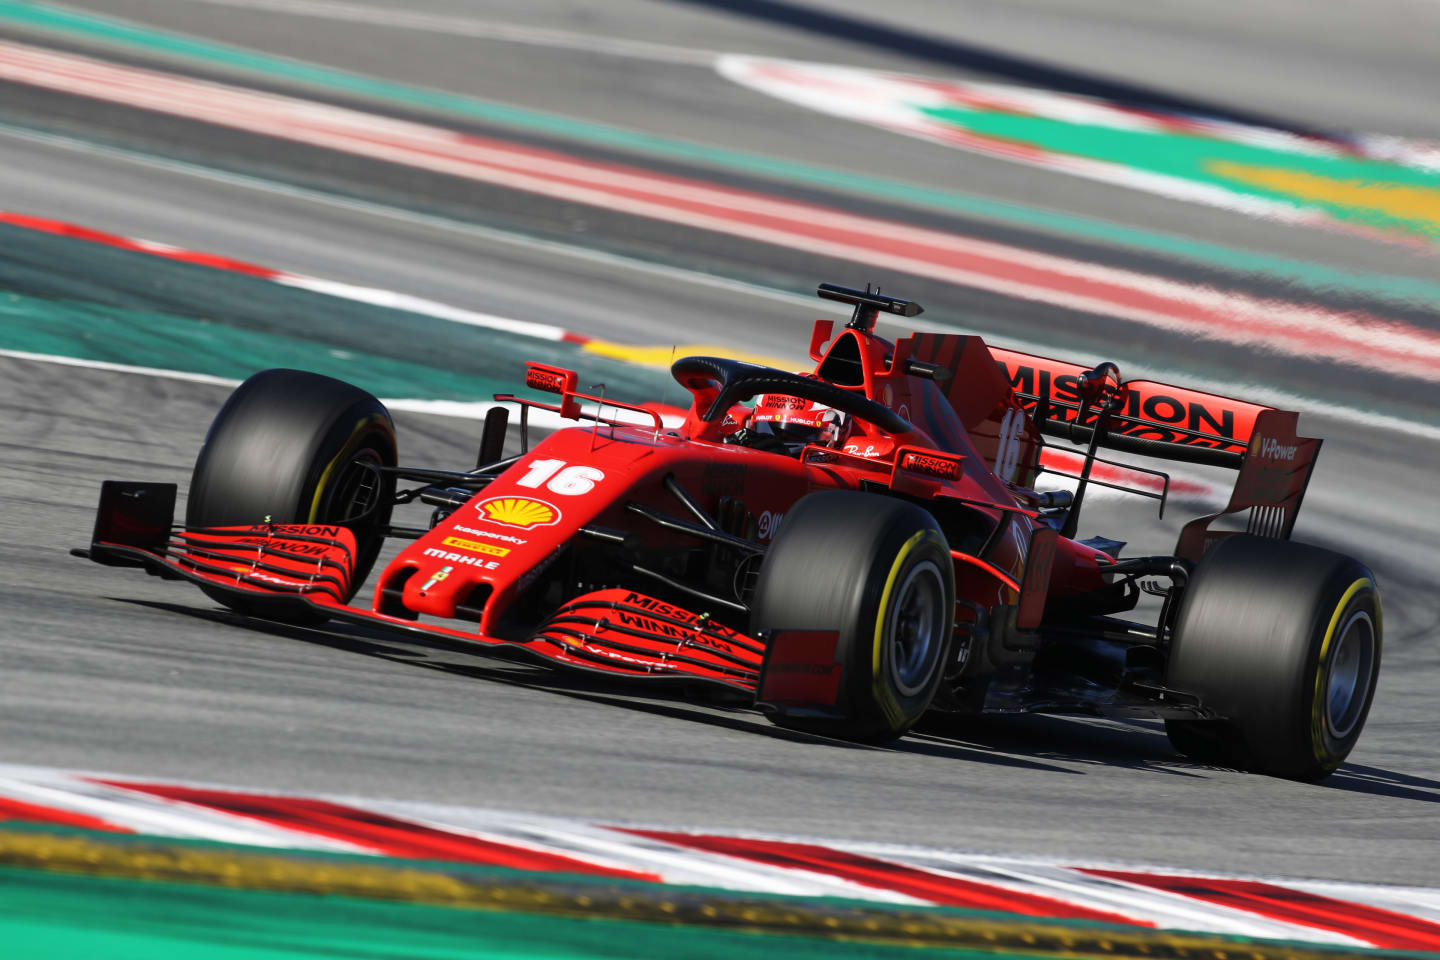 BARCELONA, SPAIN - FEBRUARY 28: Charles Leclerc of Monaco driving the (16) Scuderia Ferrari SF1000